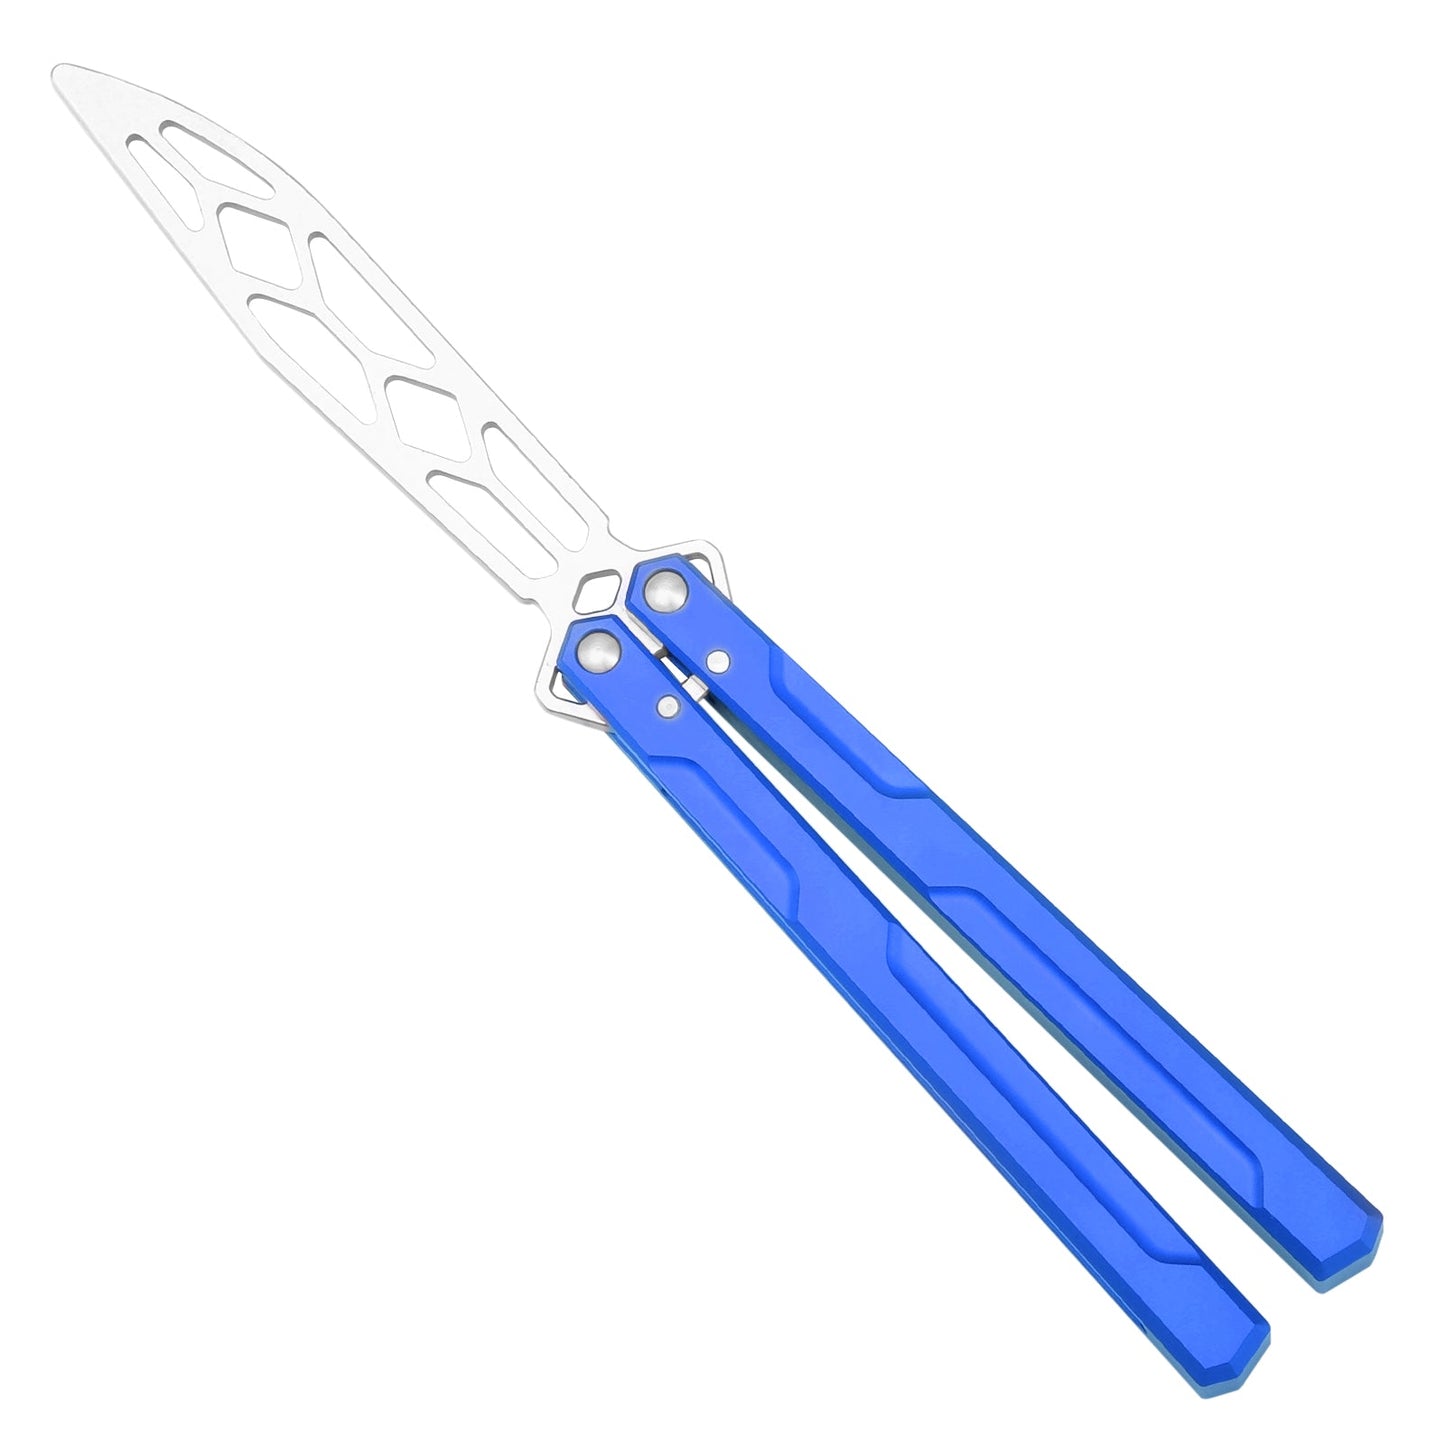 Andux Balisong Butterfly Knife CNC Effective Bushing System Training Tool 6063 Aluminum Lock Free (Blue) CNC-602